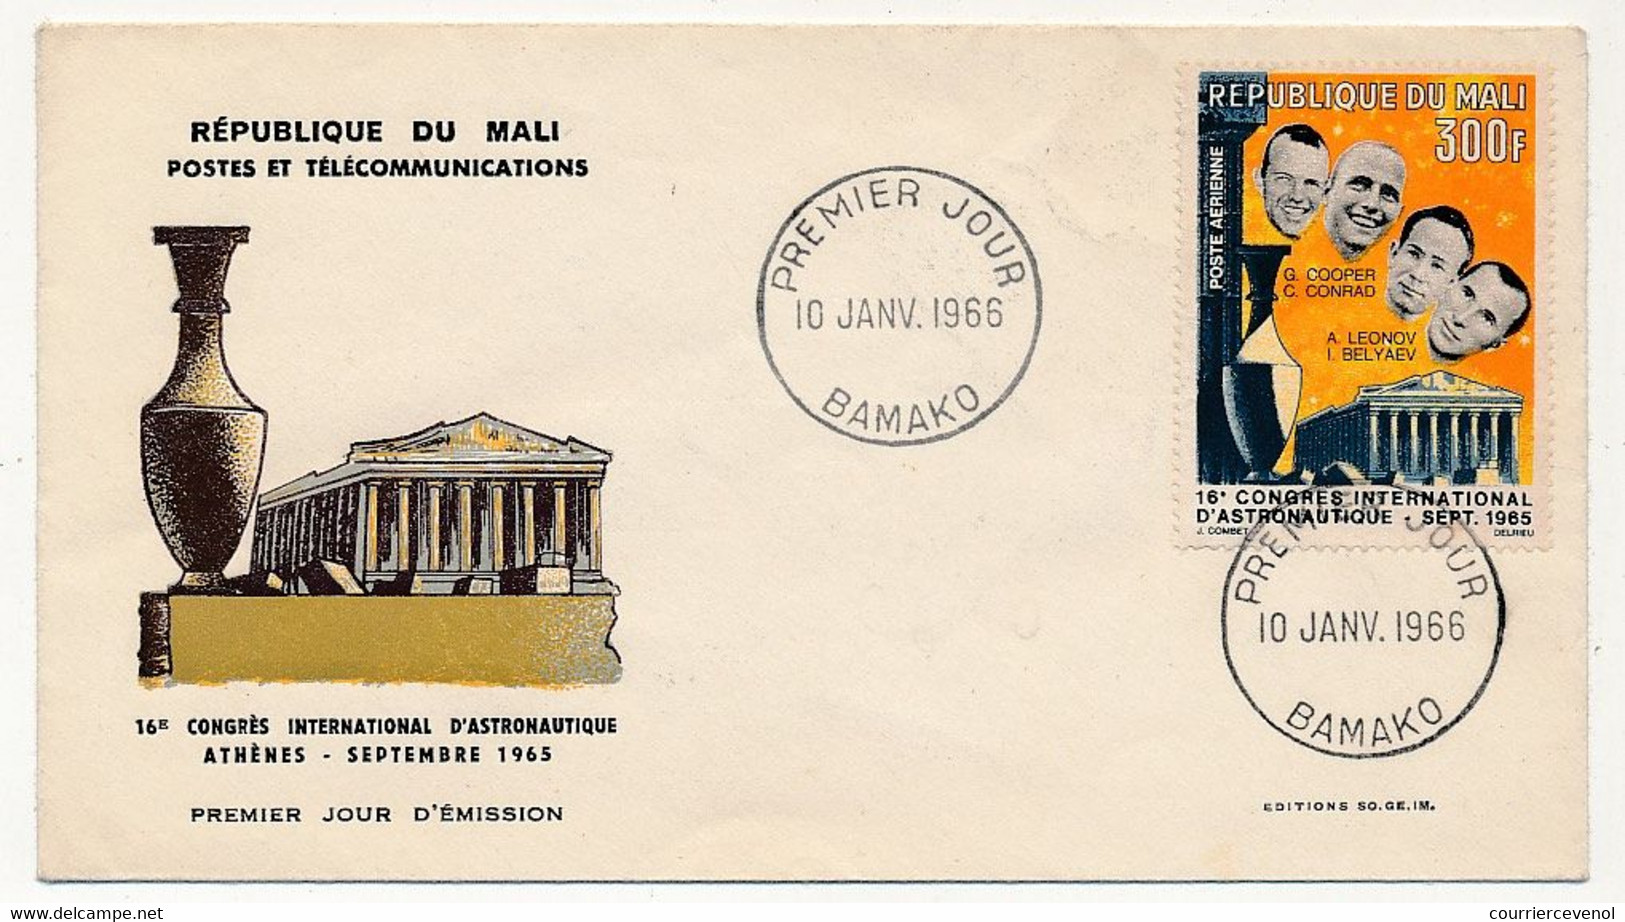 MALI => Enveloppe FDC => 300F 16eme Congrès National D'Aéronautique - 10 Janvier 1966 - Bamako - Mali (1959-...)